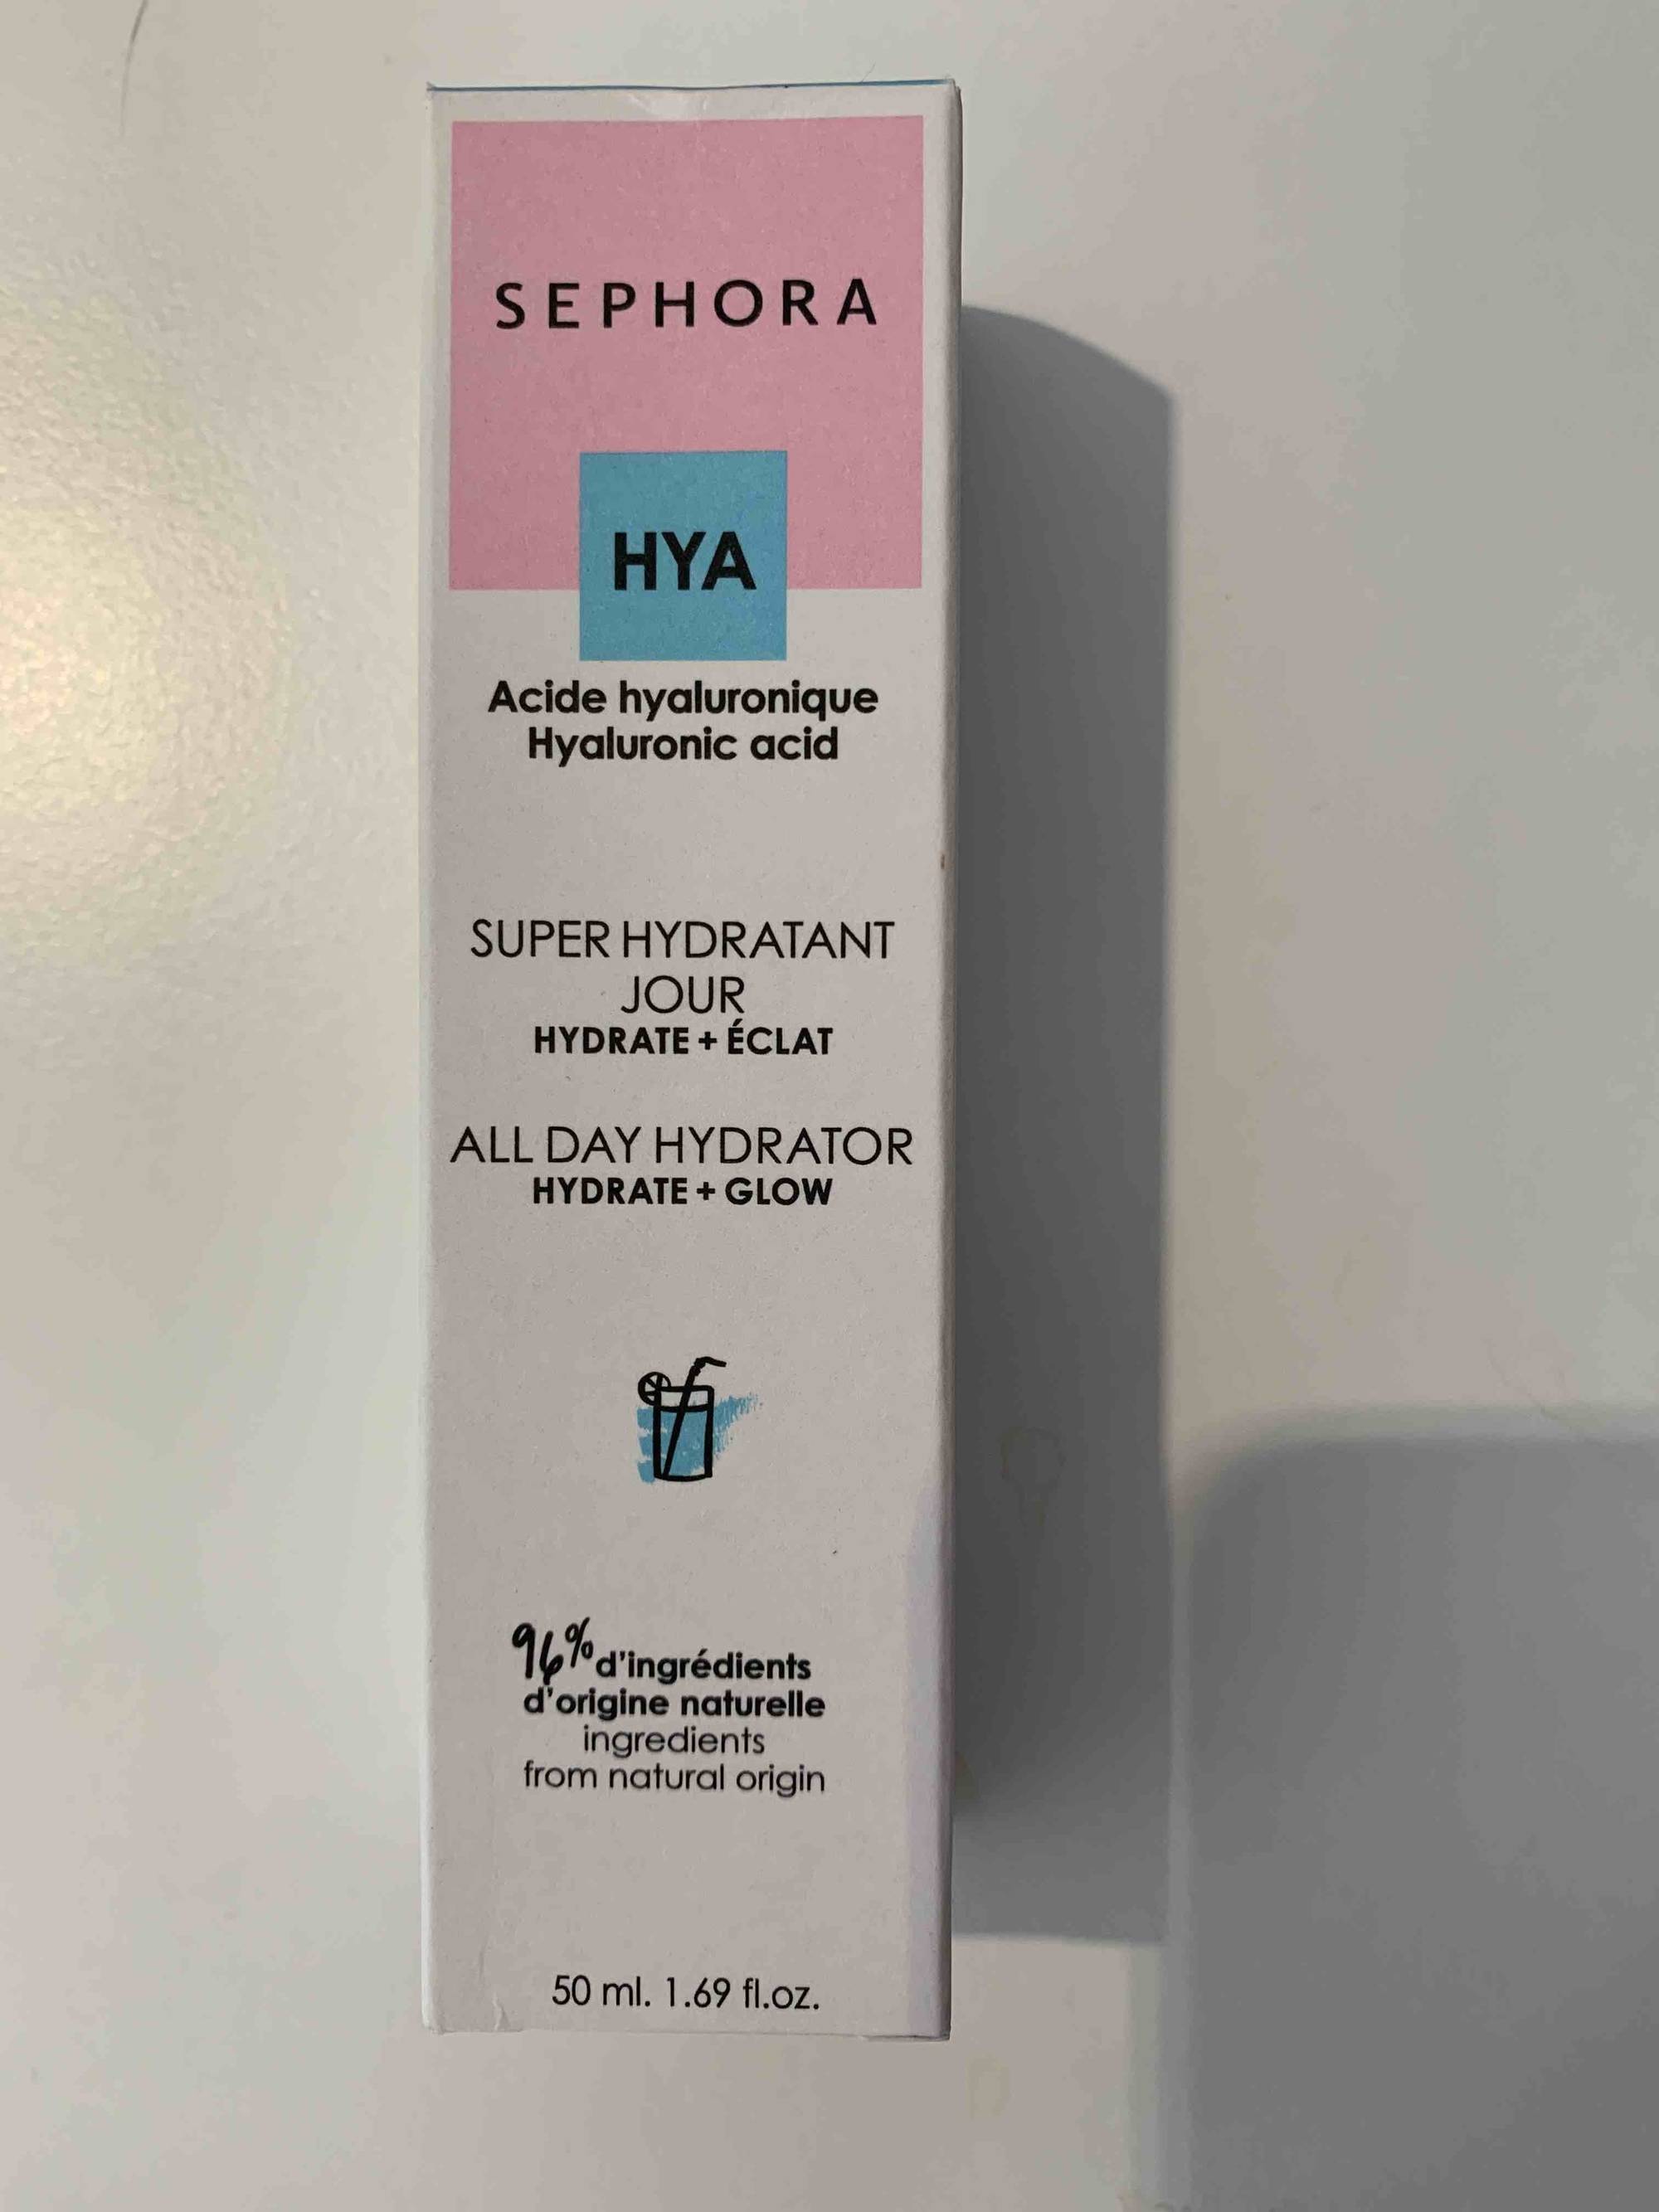 SEPHORA - HYA - Super hydratant jour 